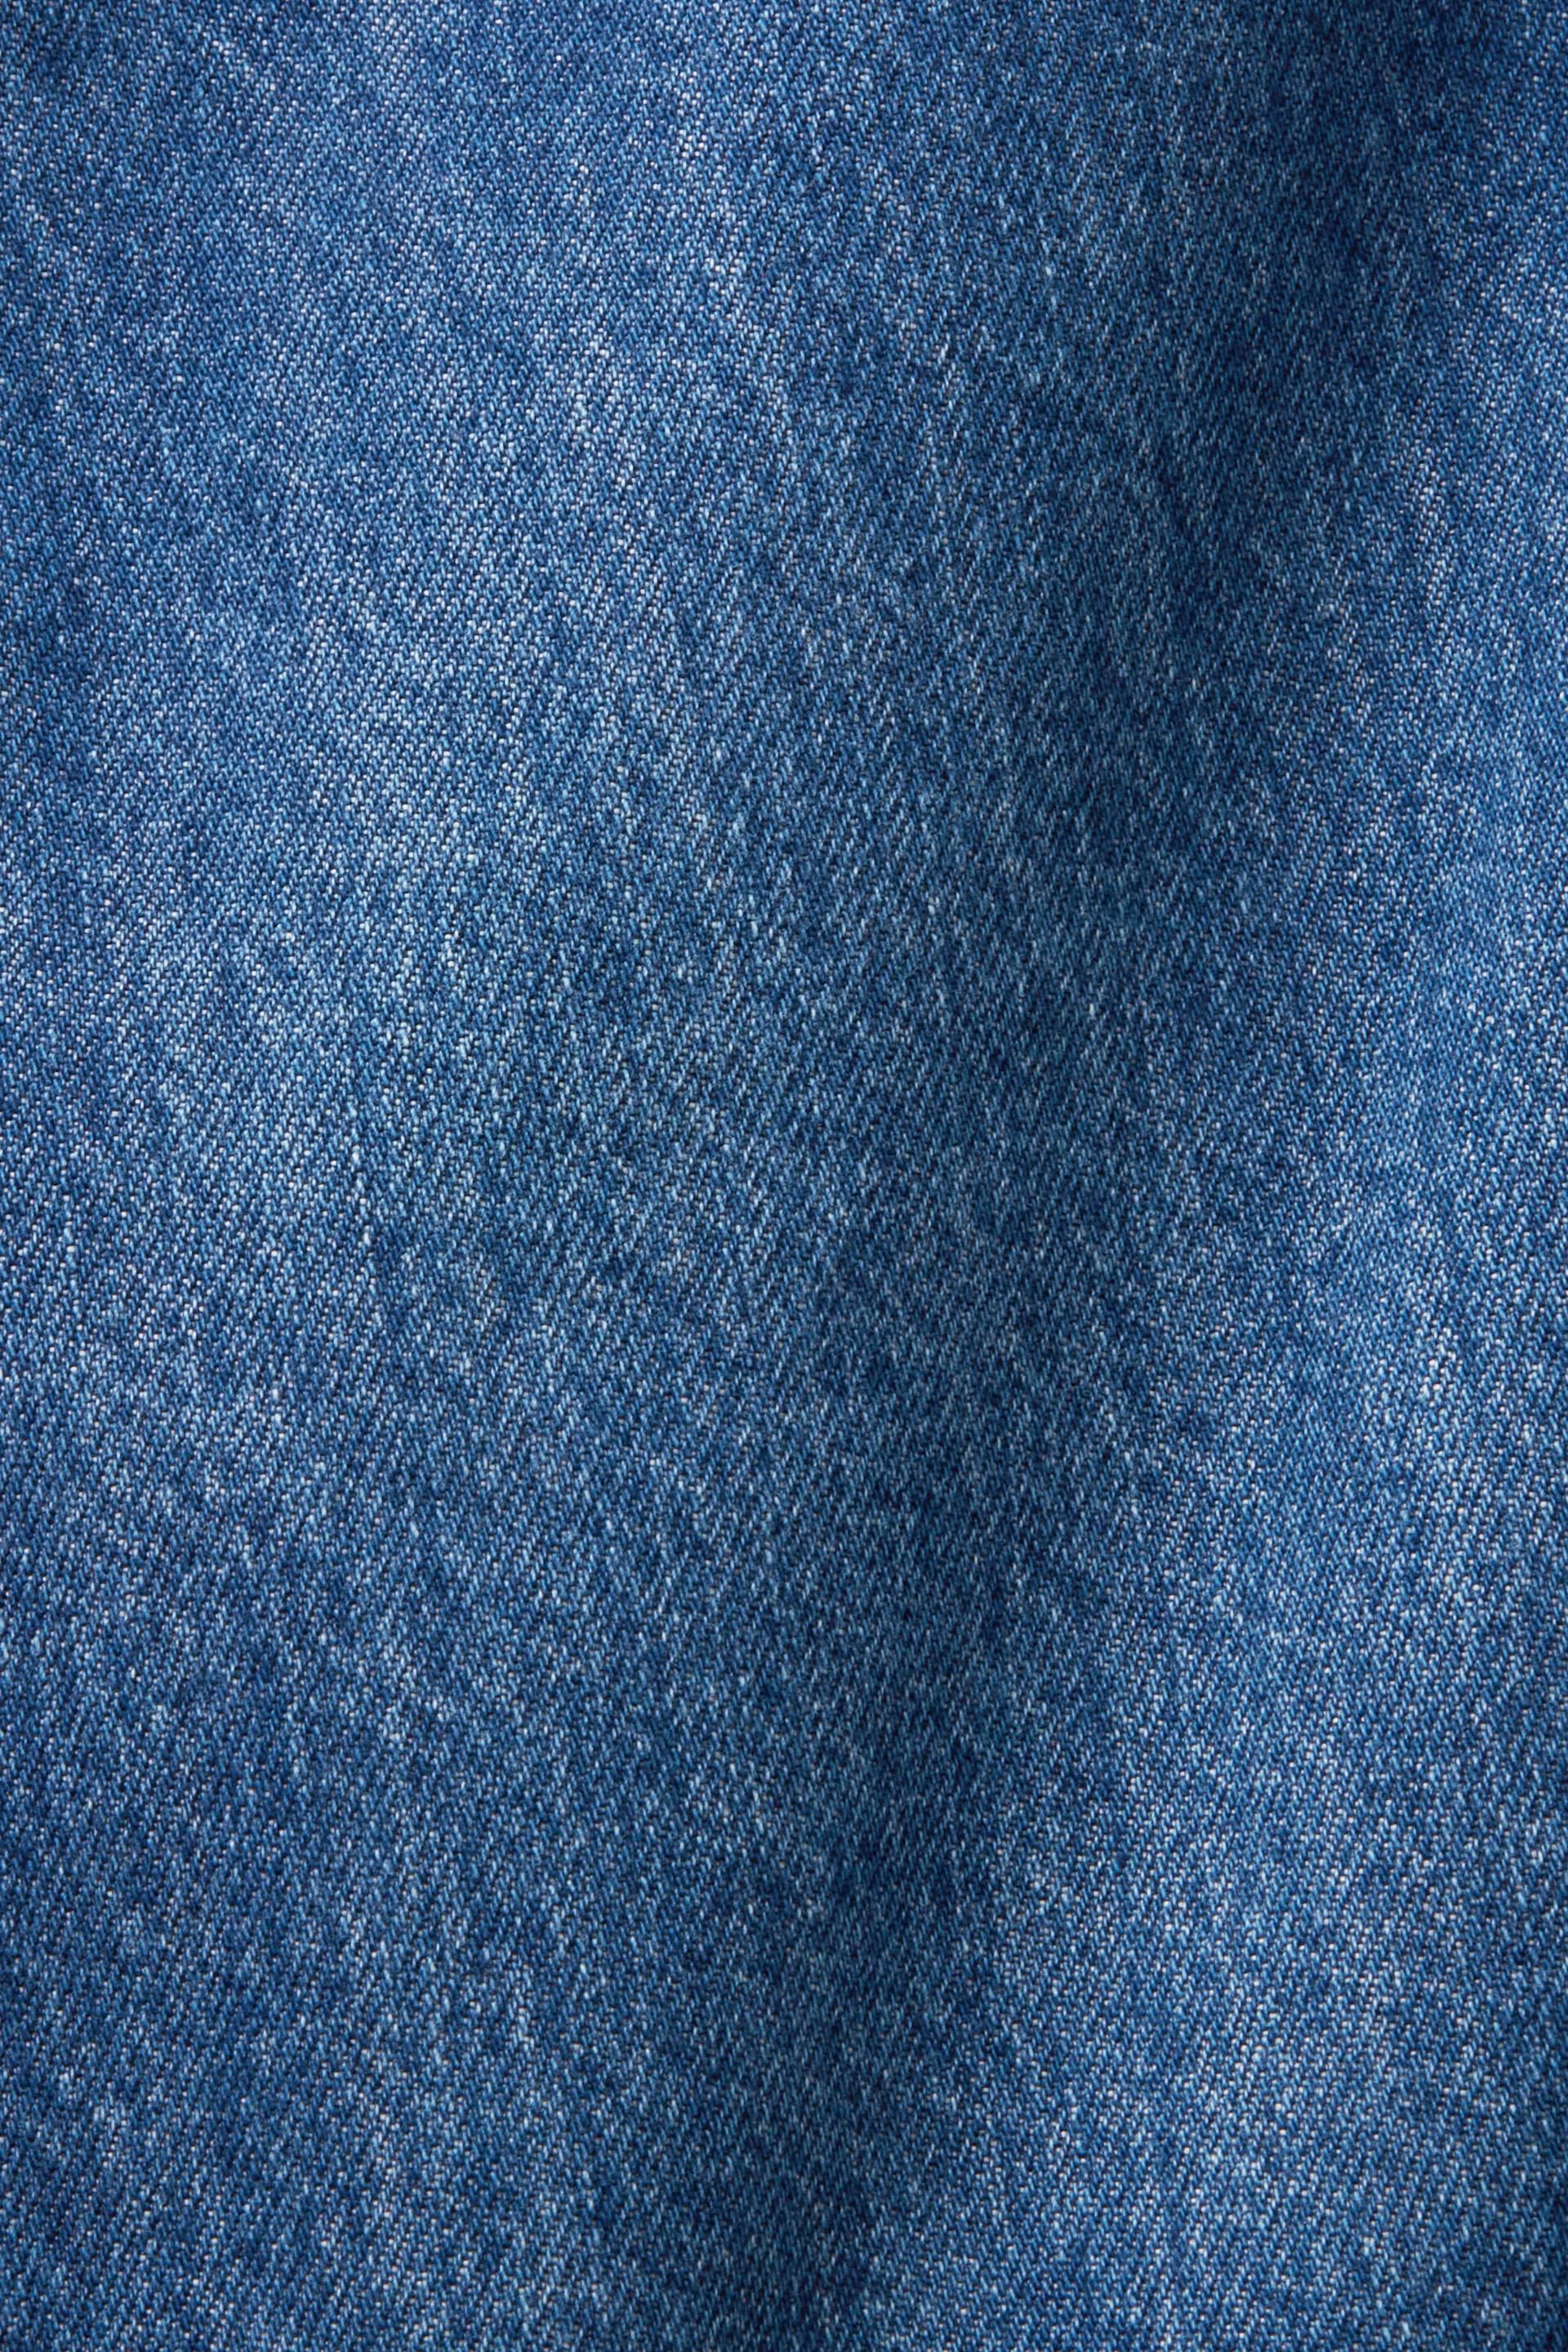 Esprit mit Jeans-Minirock asymmetrischem Saum